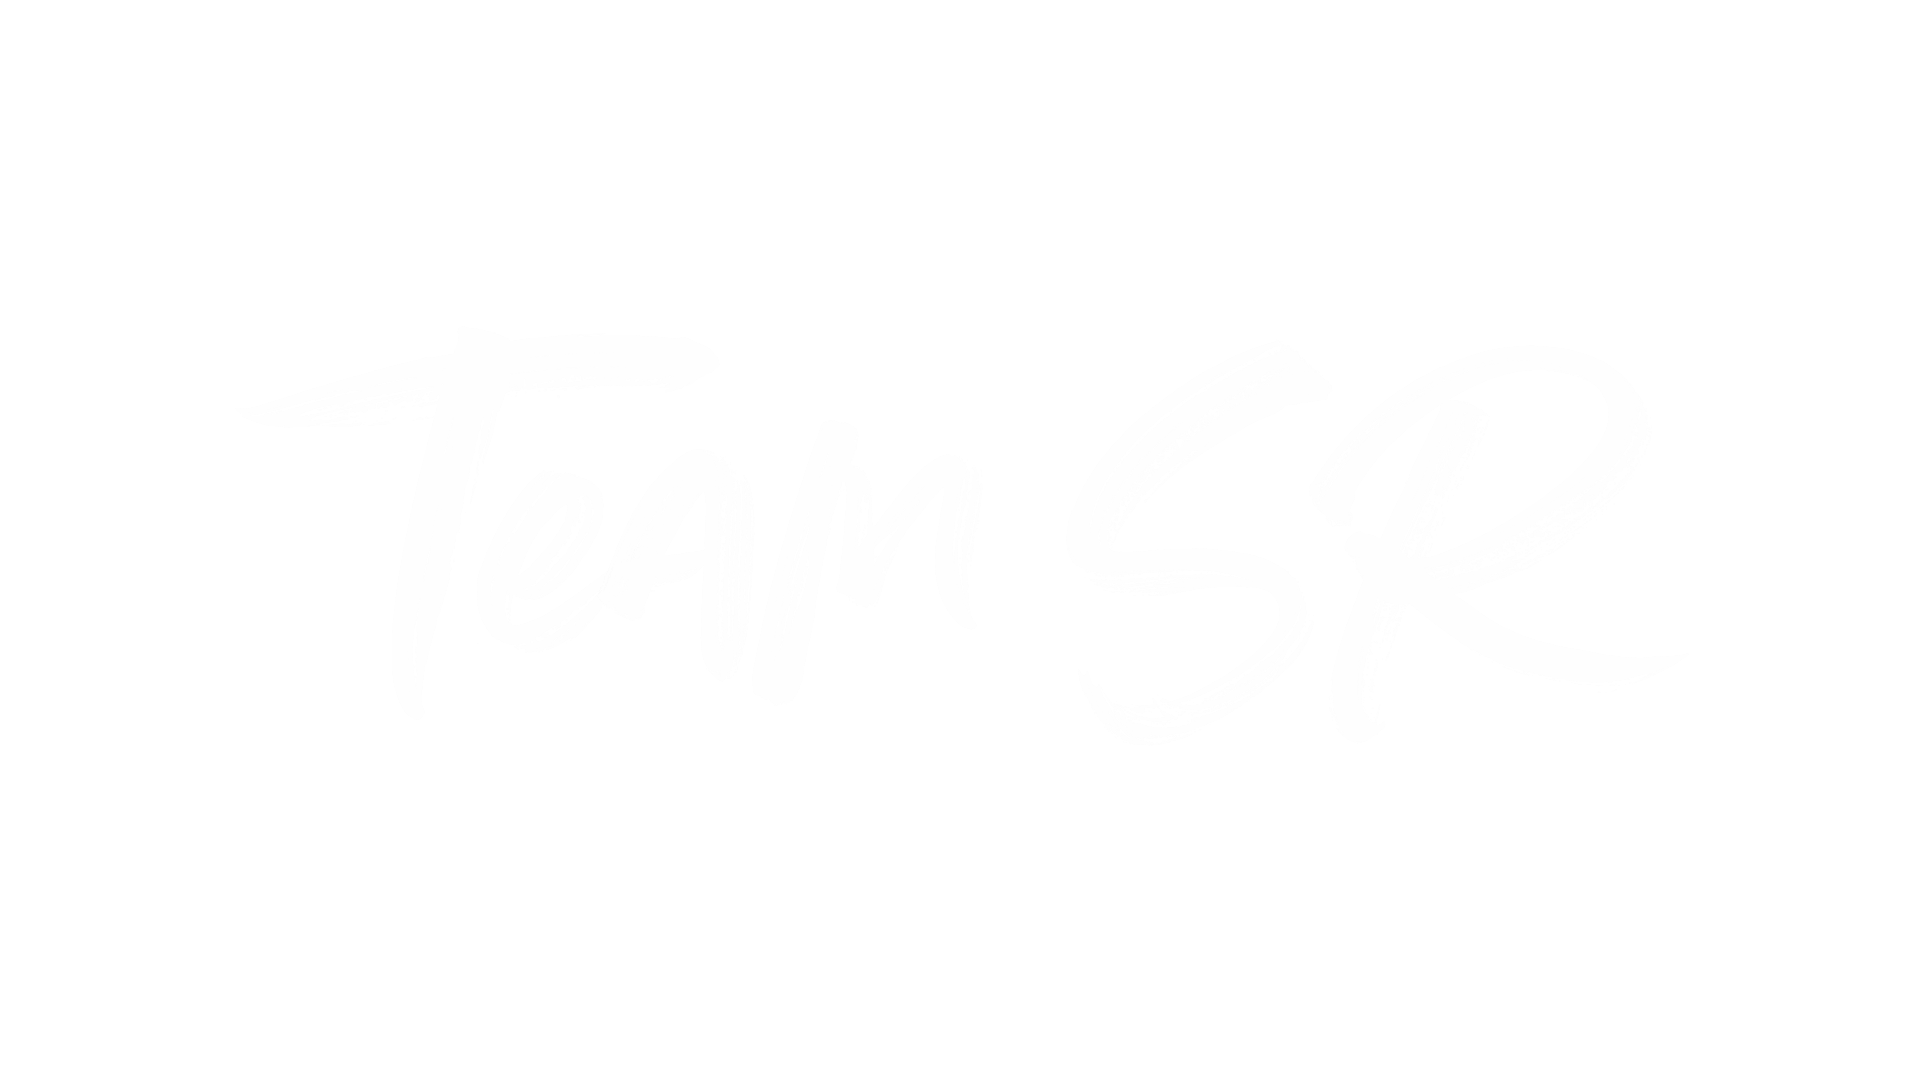 Team SR word mark with UIDEA logo on blue and orange background